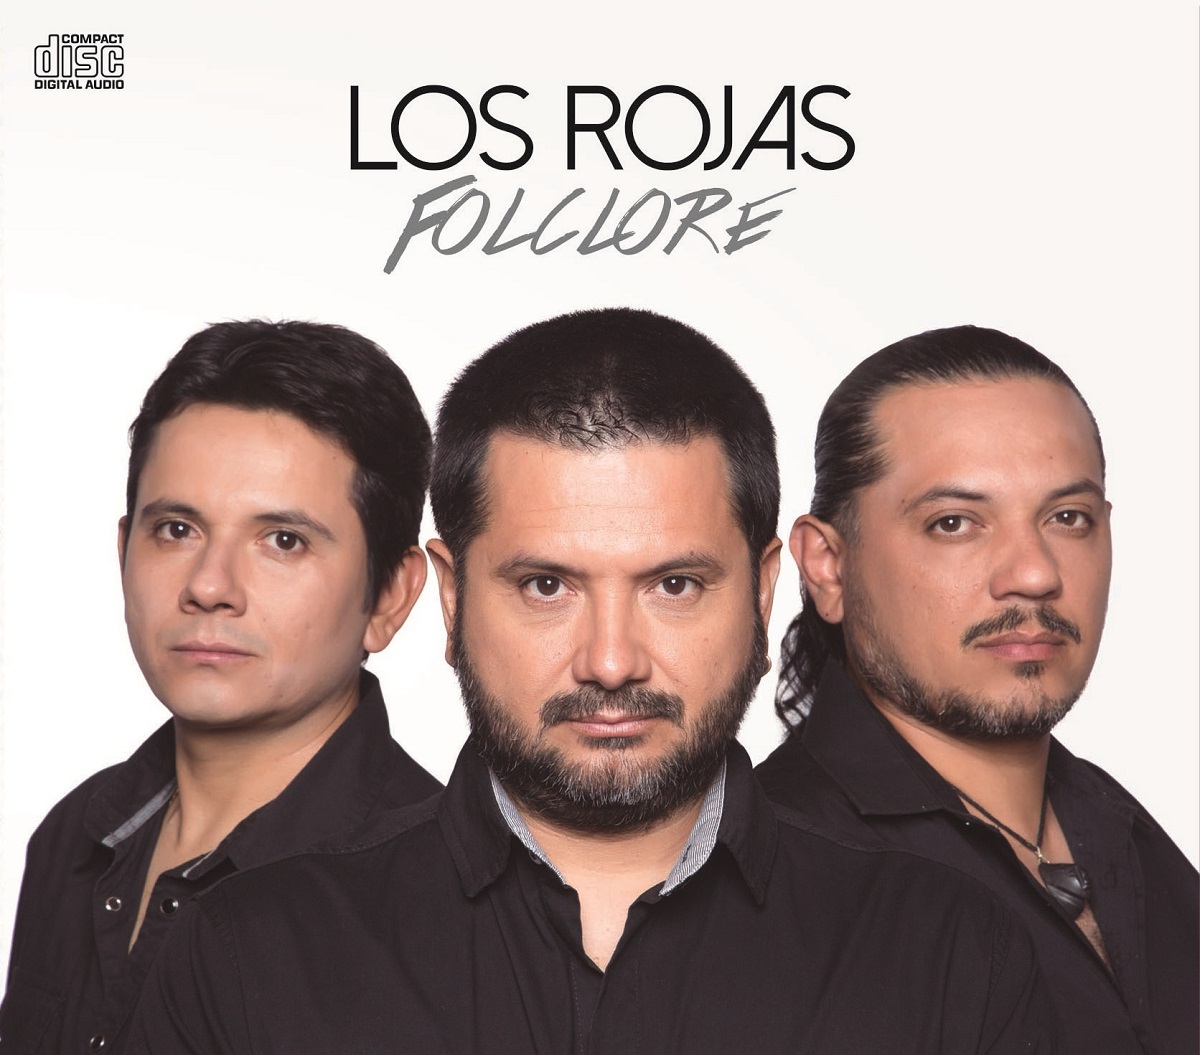 Folclore (Los Rojas) - Obras Jorge Rosas